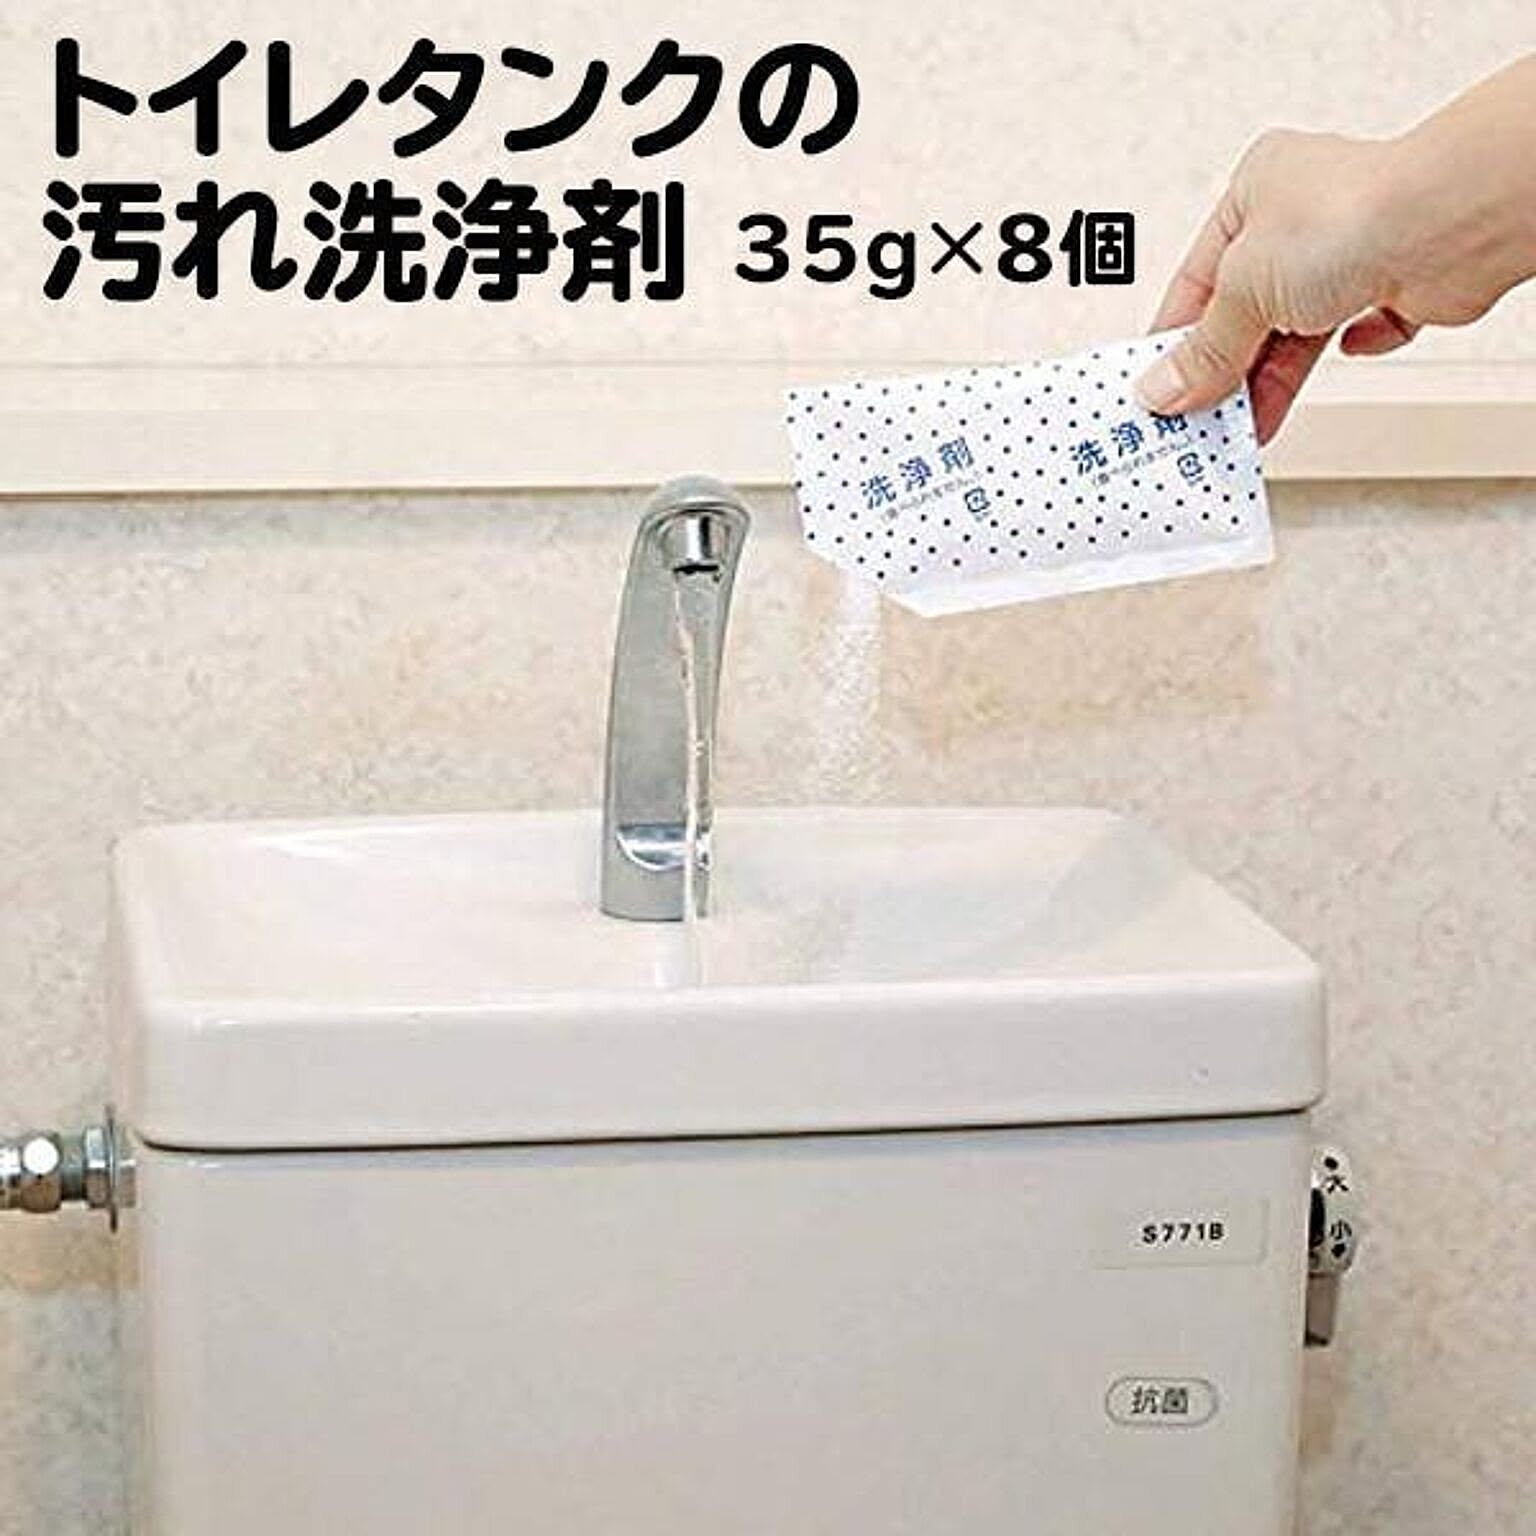 【KP】【▲】/トイレタンクの汚れ洗浄剤 35g×8個入